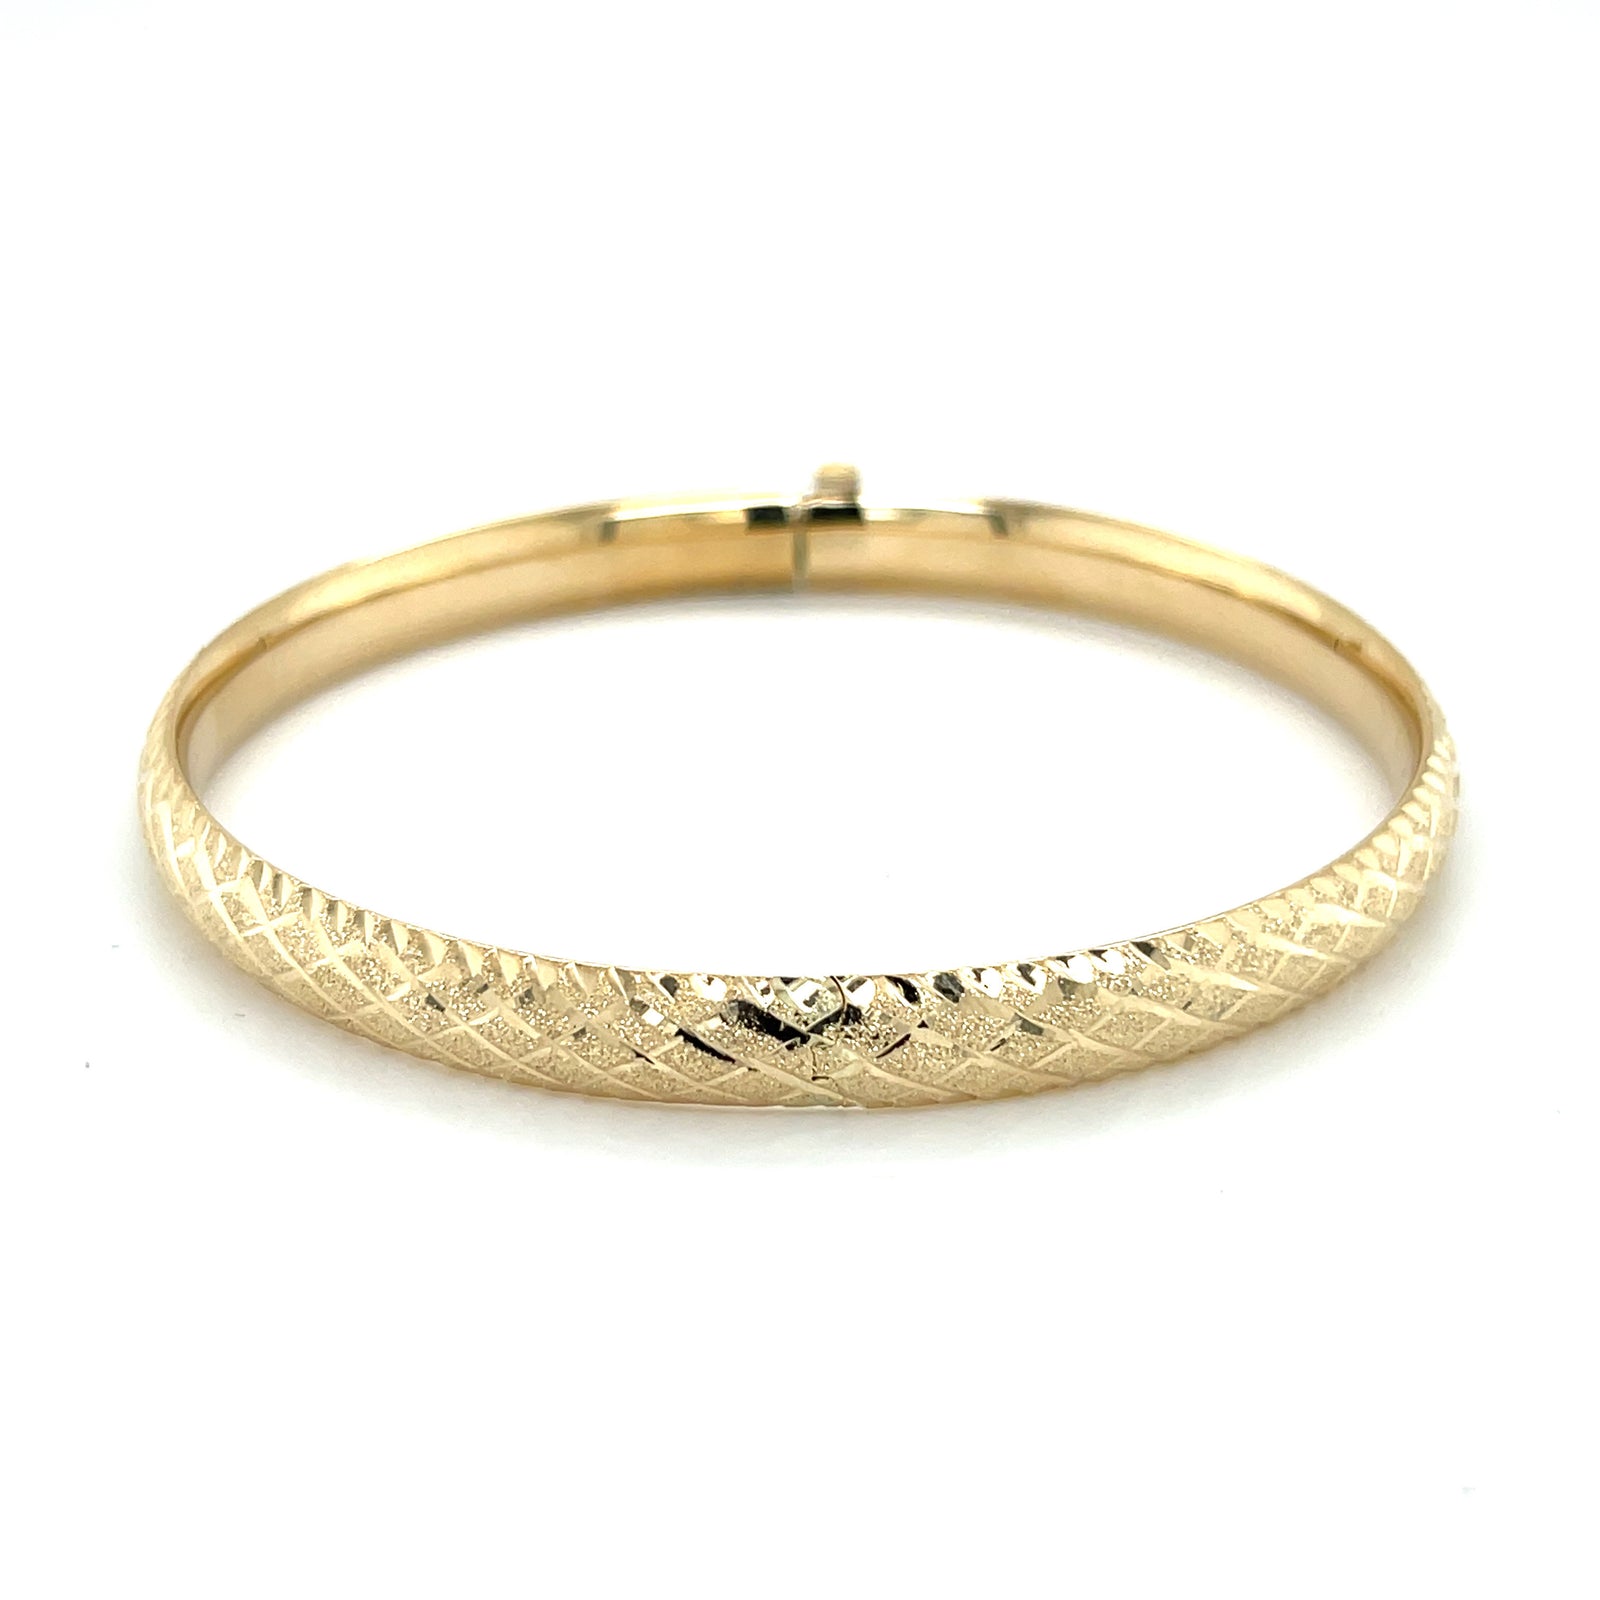 Goldmania Jewelry | Real Gold Jewelry | Shop Solid 14k Jewelry